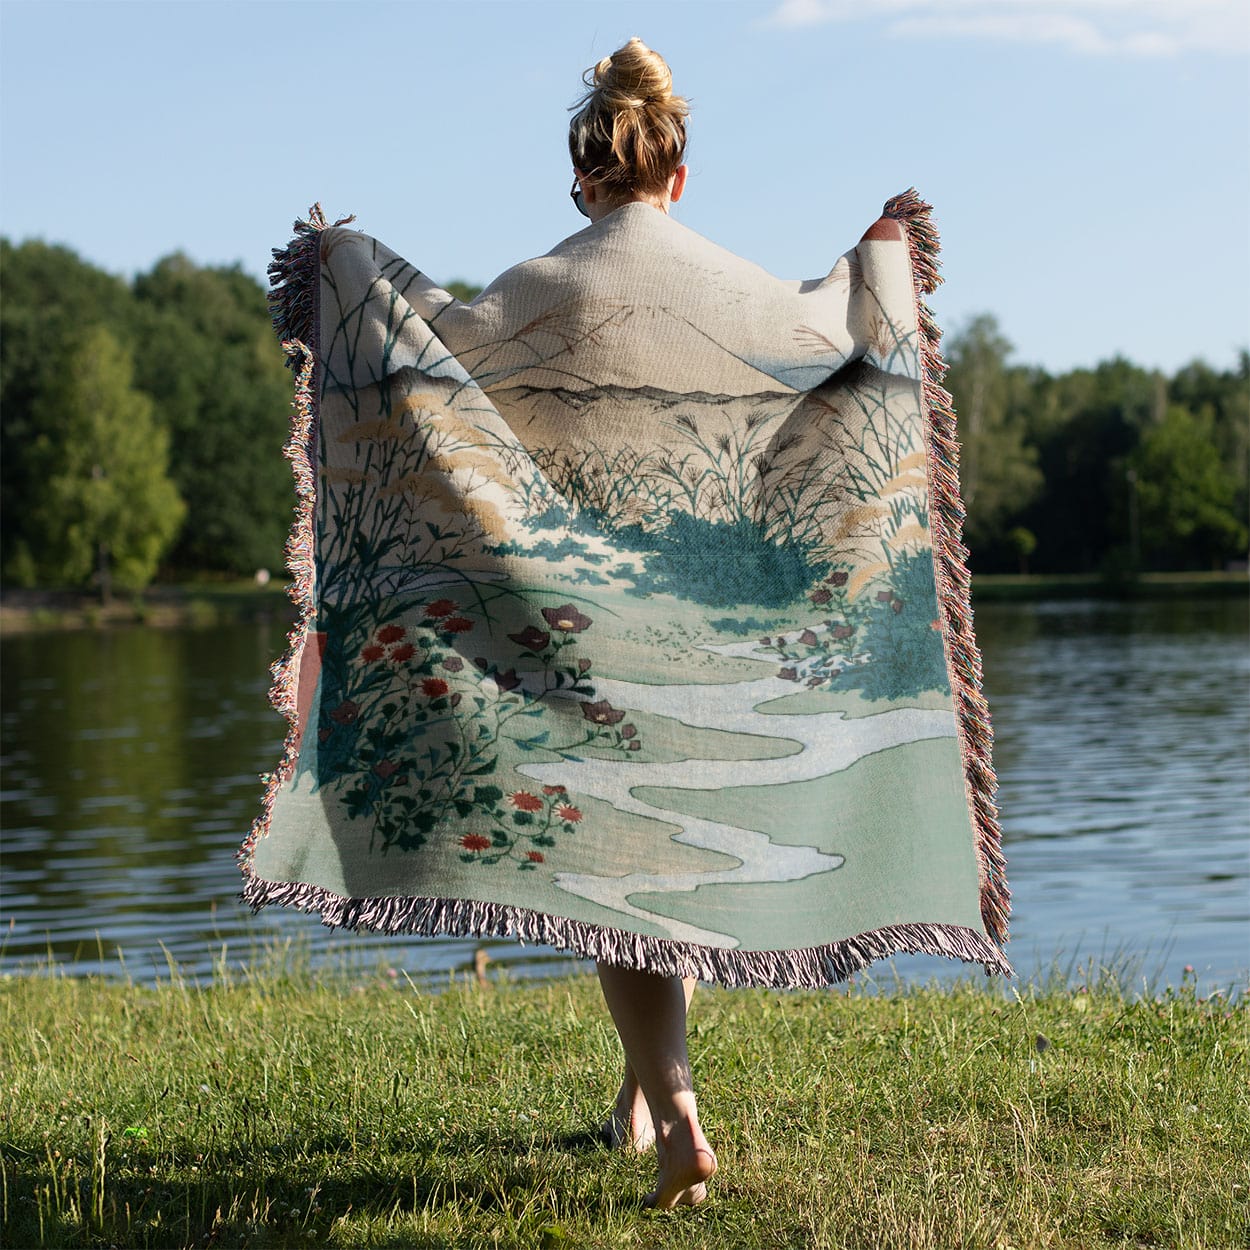 Japanese Spring Landscape Woven Blanket Held on a Woman's Back Outside